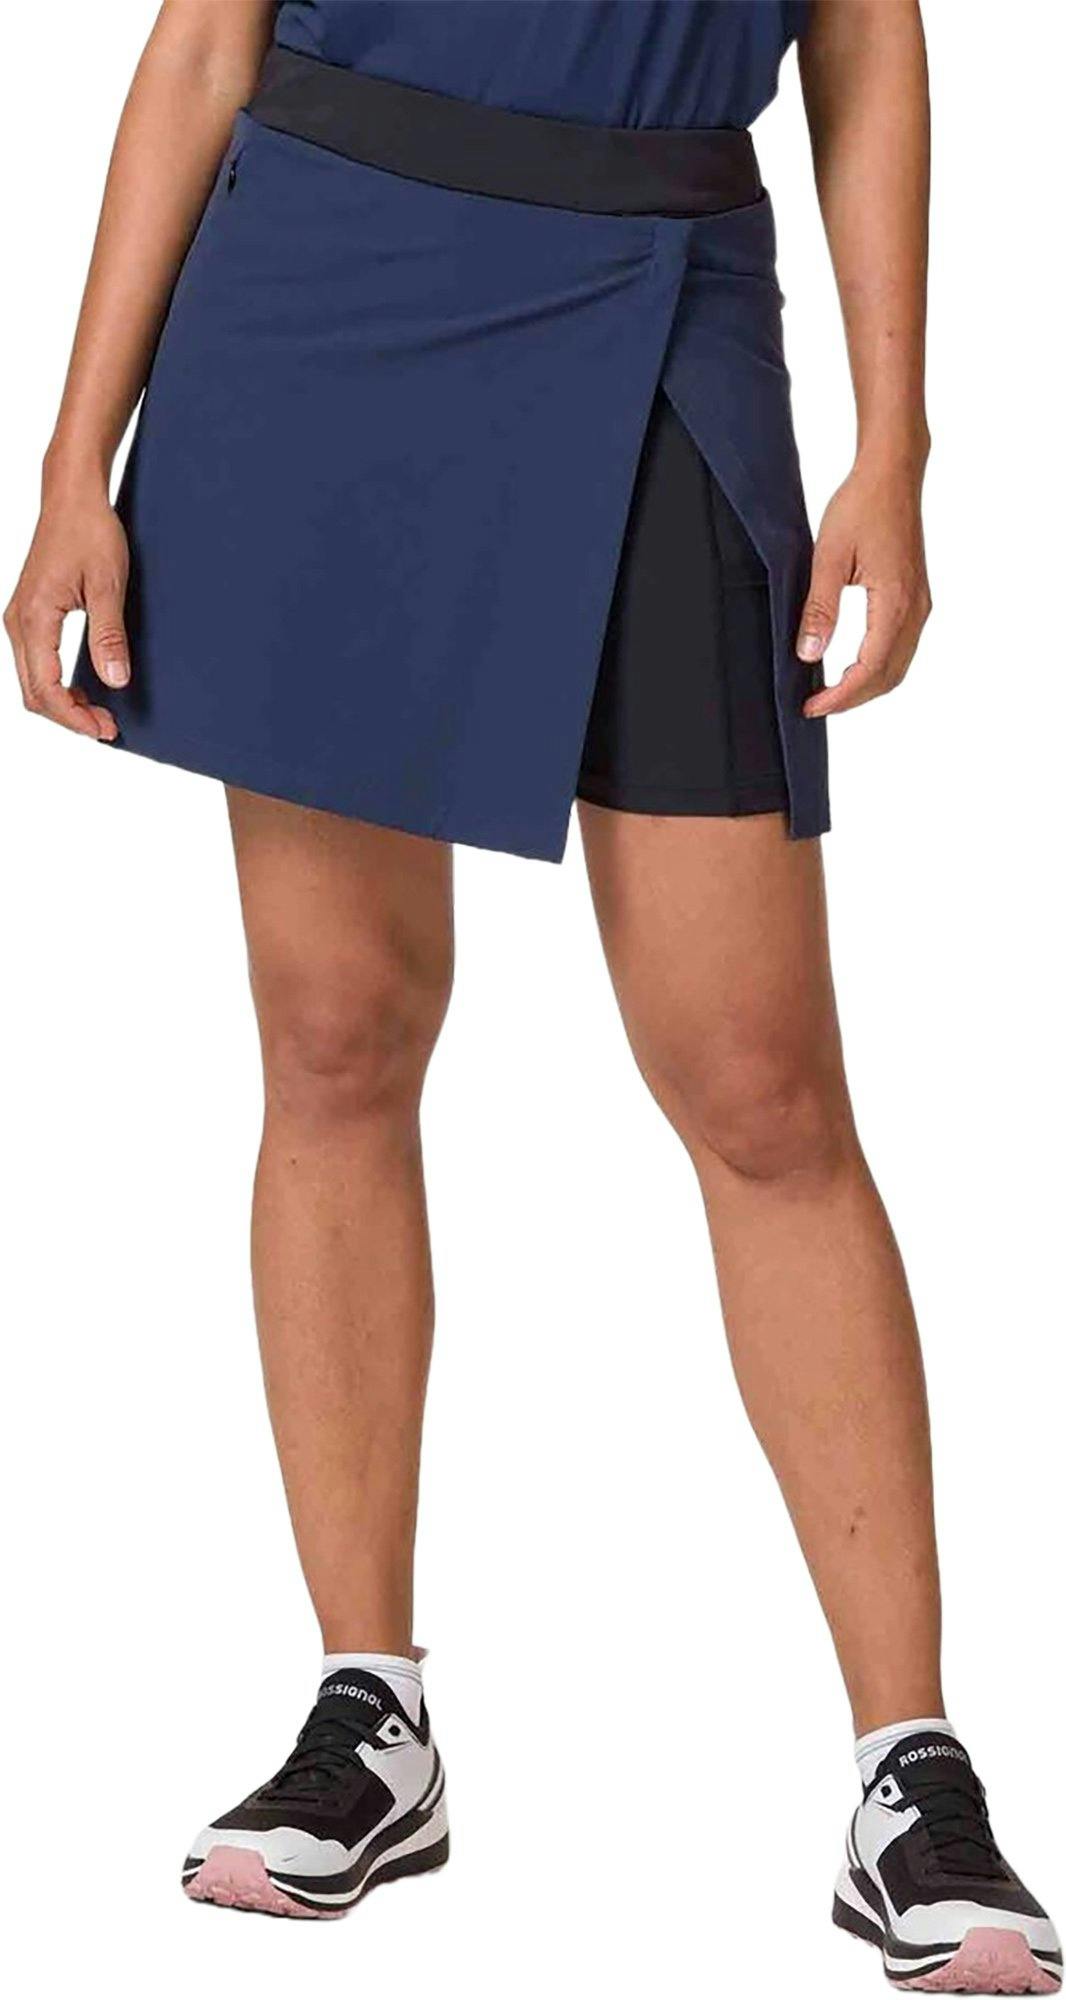 Product image for SKPR Lightweight Breathable Skirt - Women's